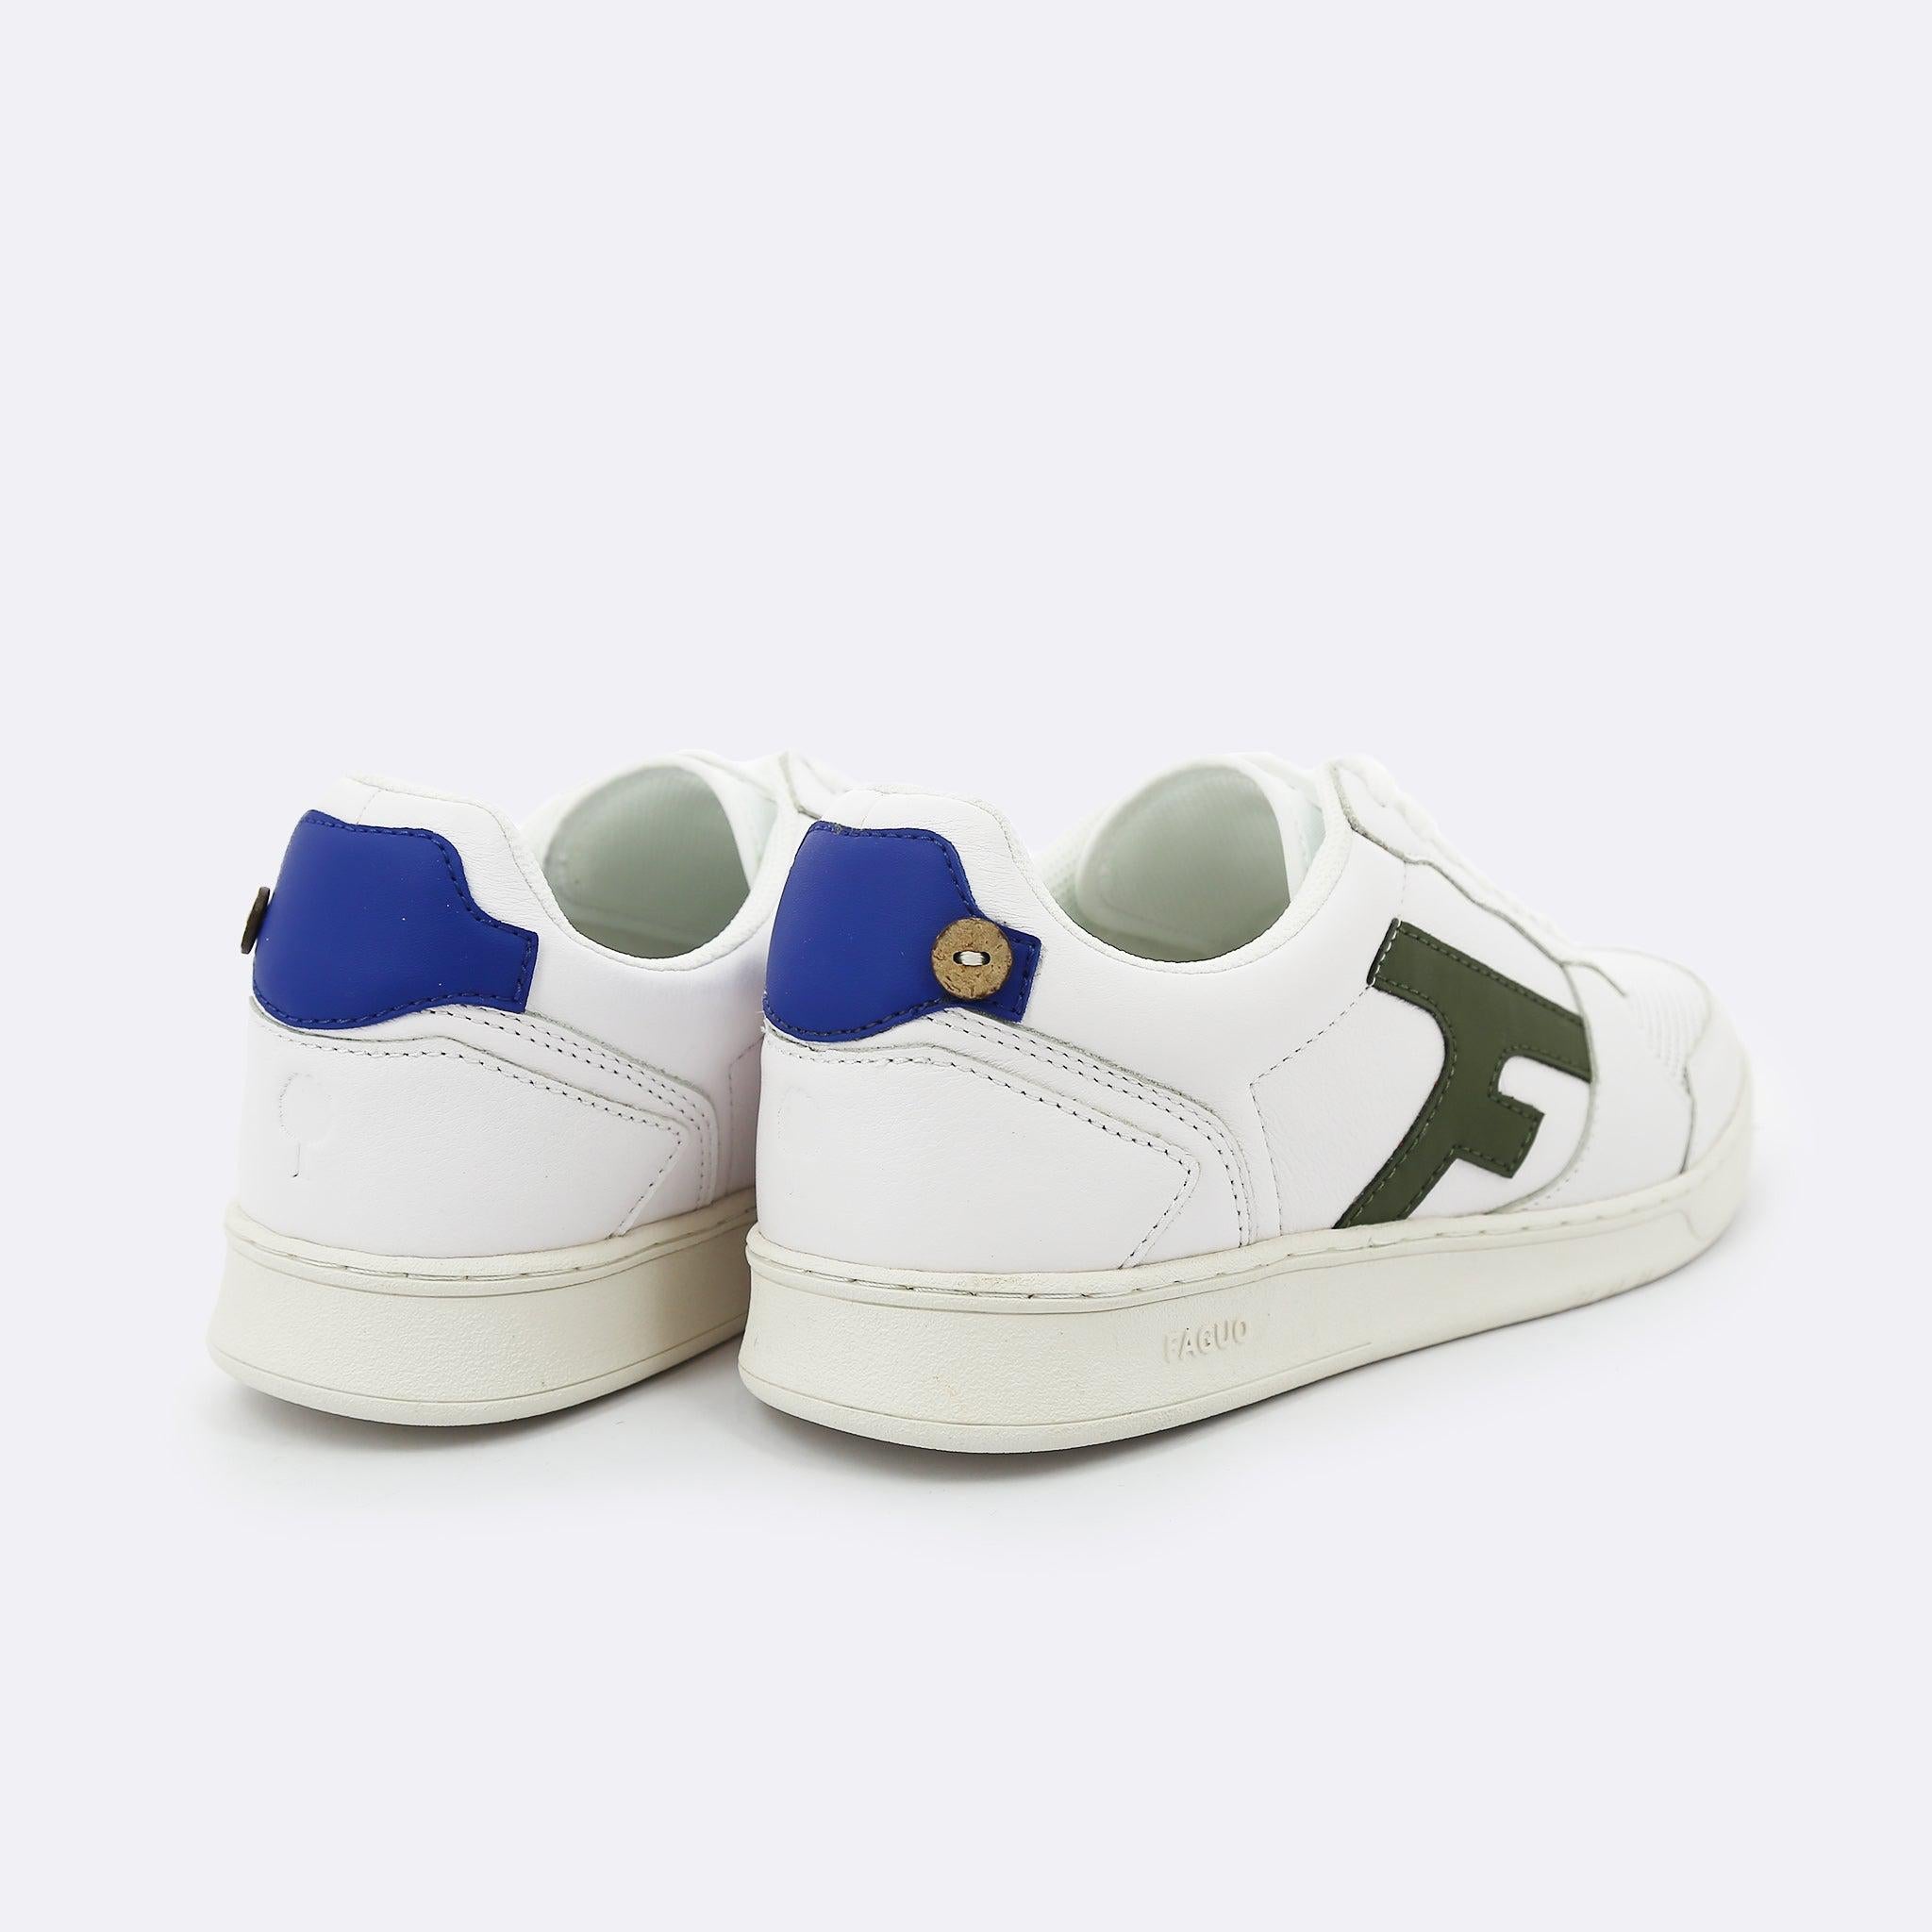 Faguo - White, Kaki & Blue sneakers in Leather - Hazel - The Good Chic